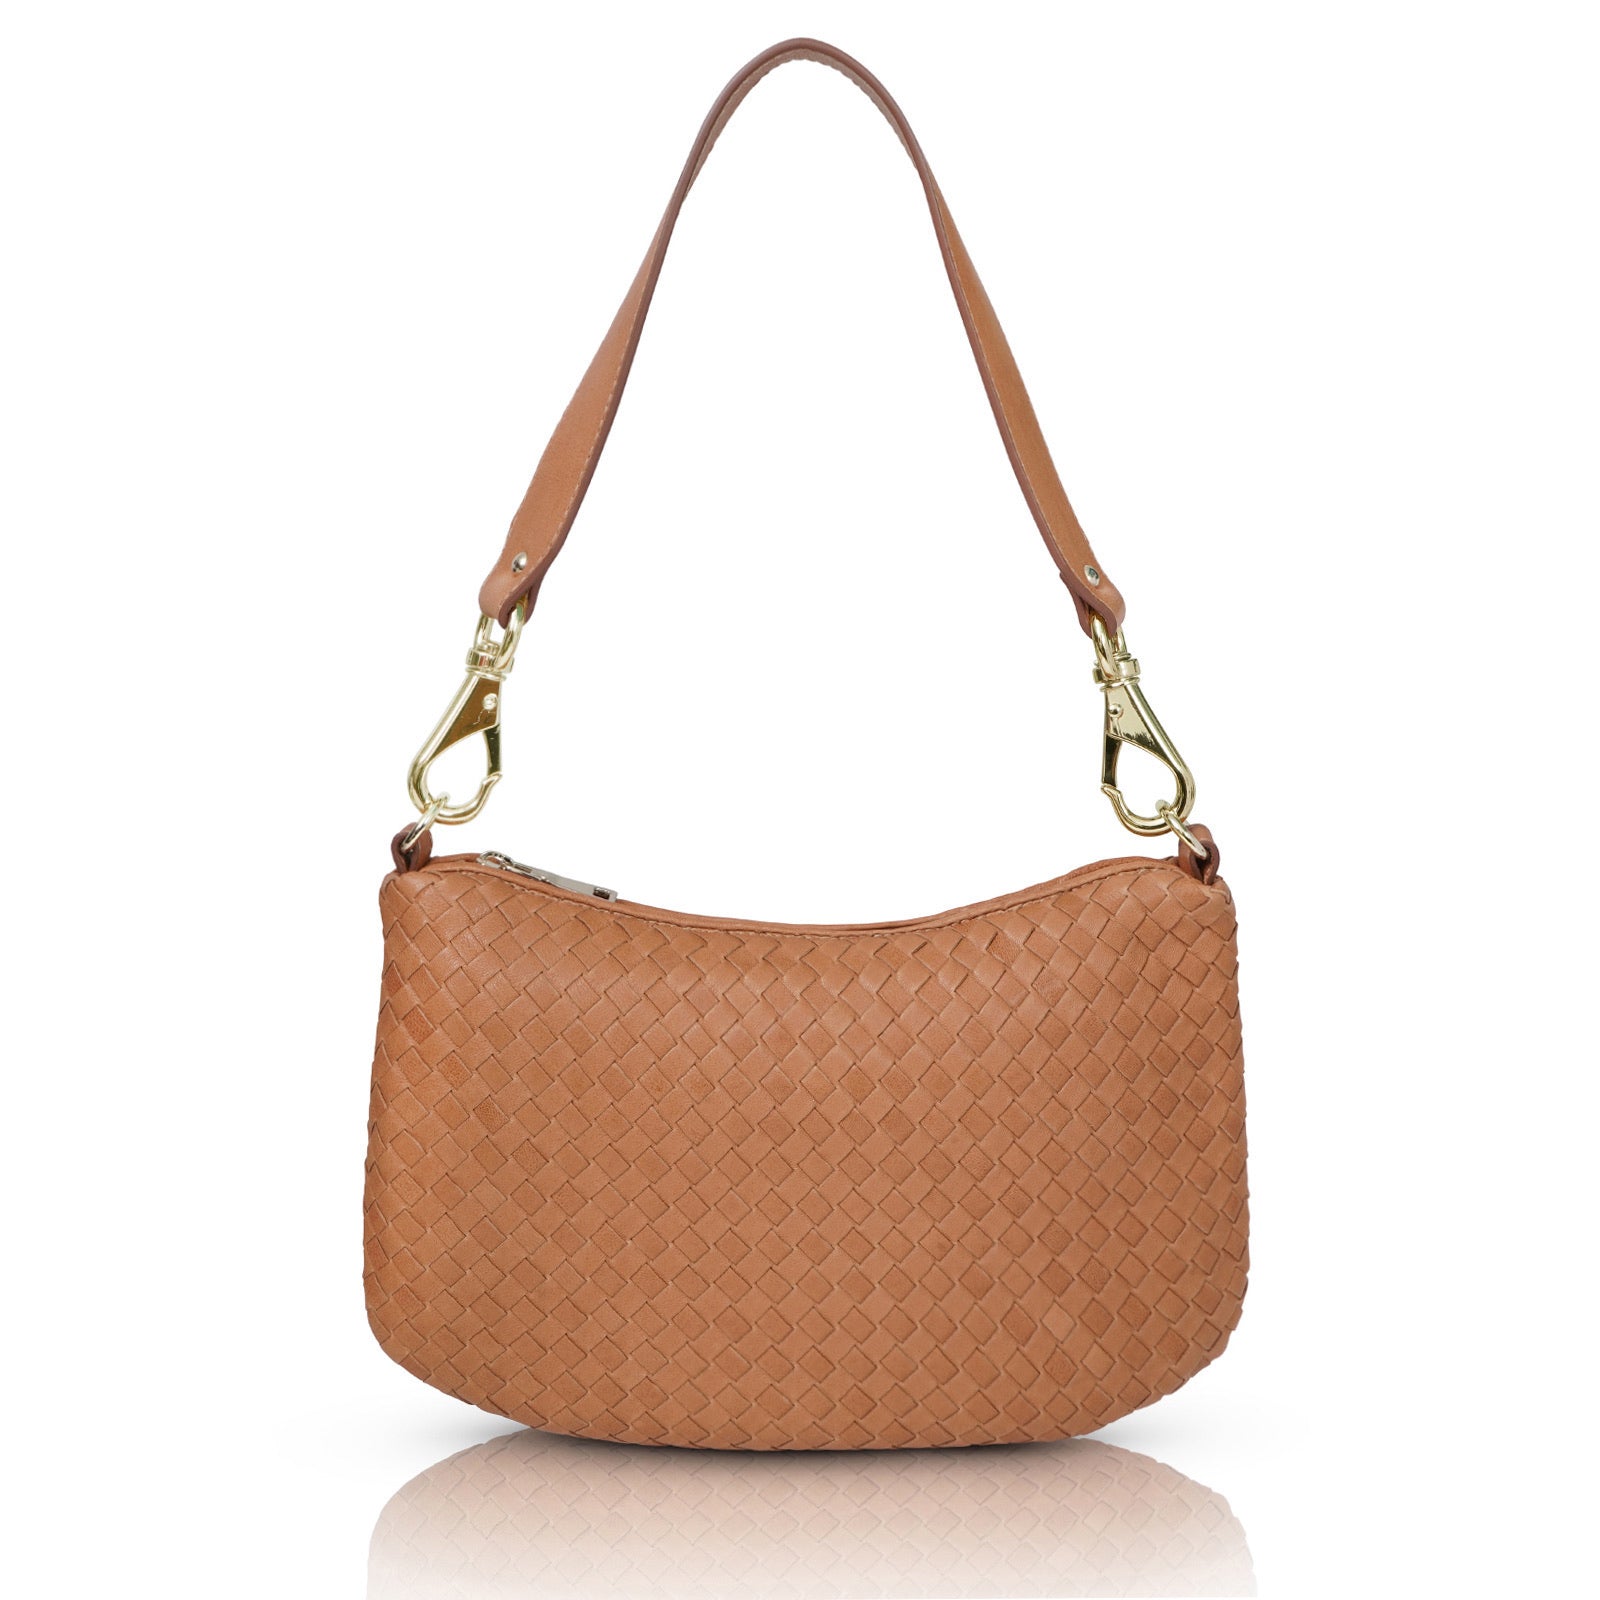 Bottega Veneta Mini Loop Bag - quality? : r/handbags